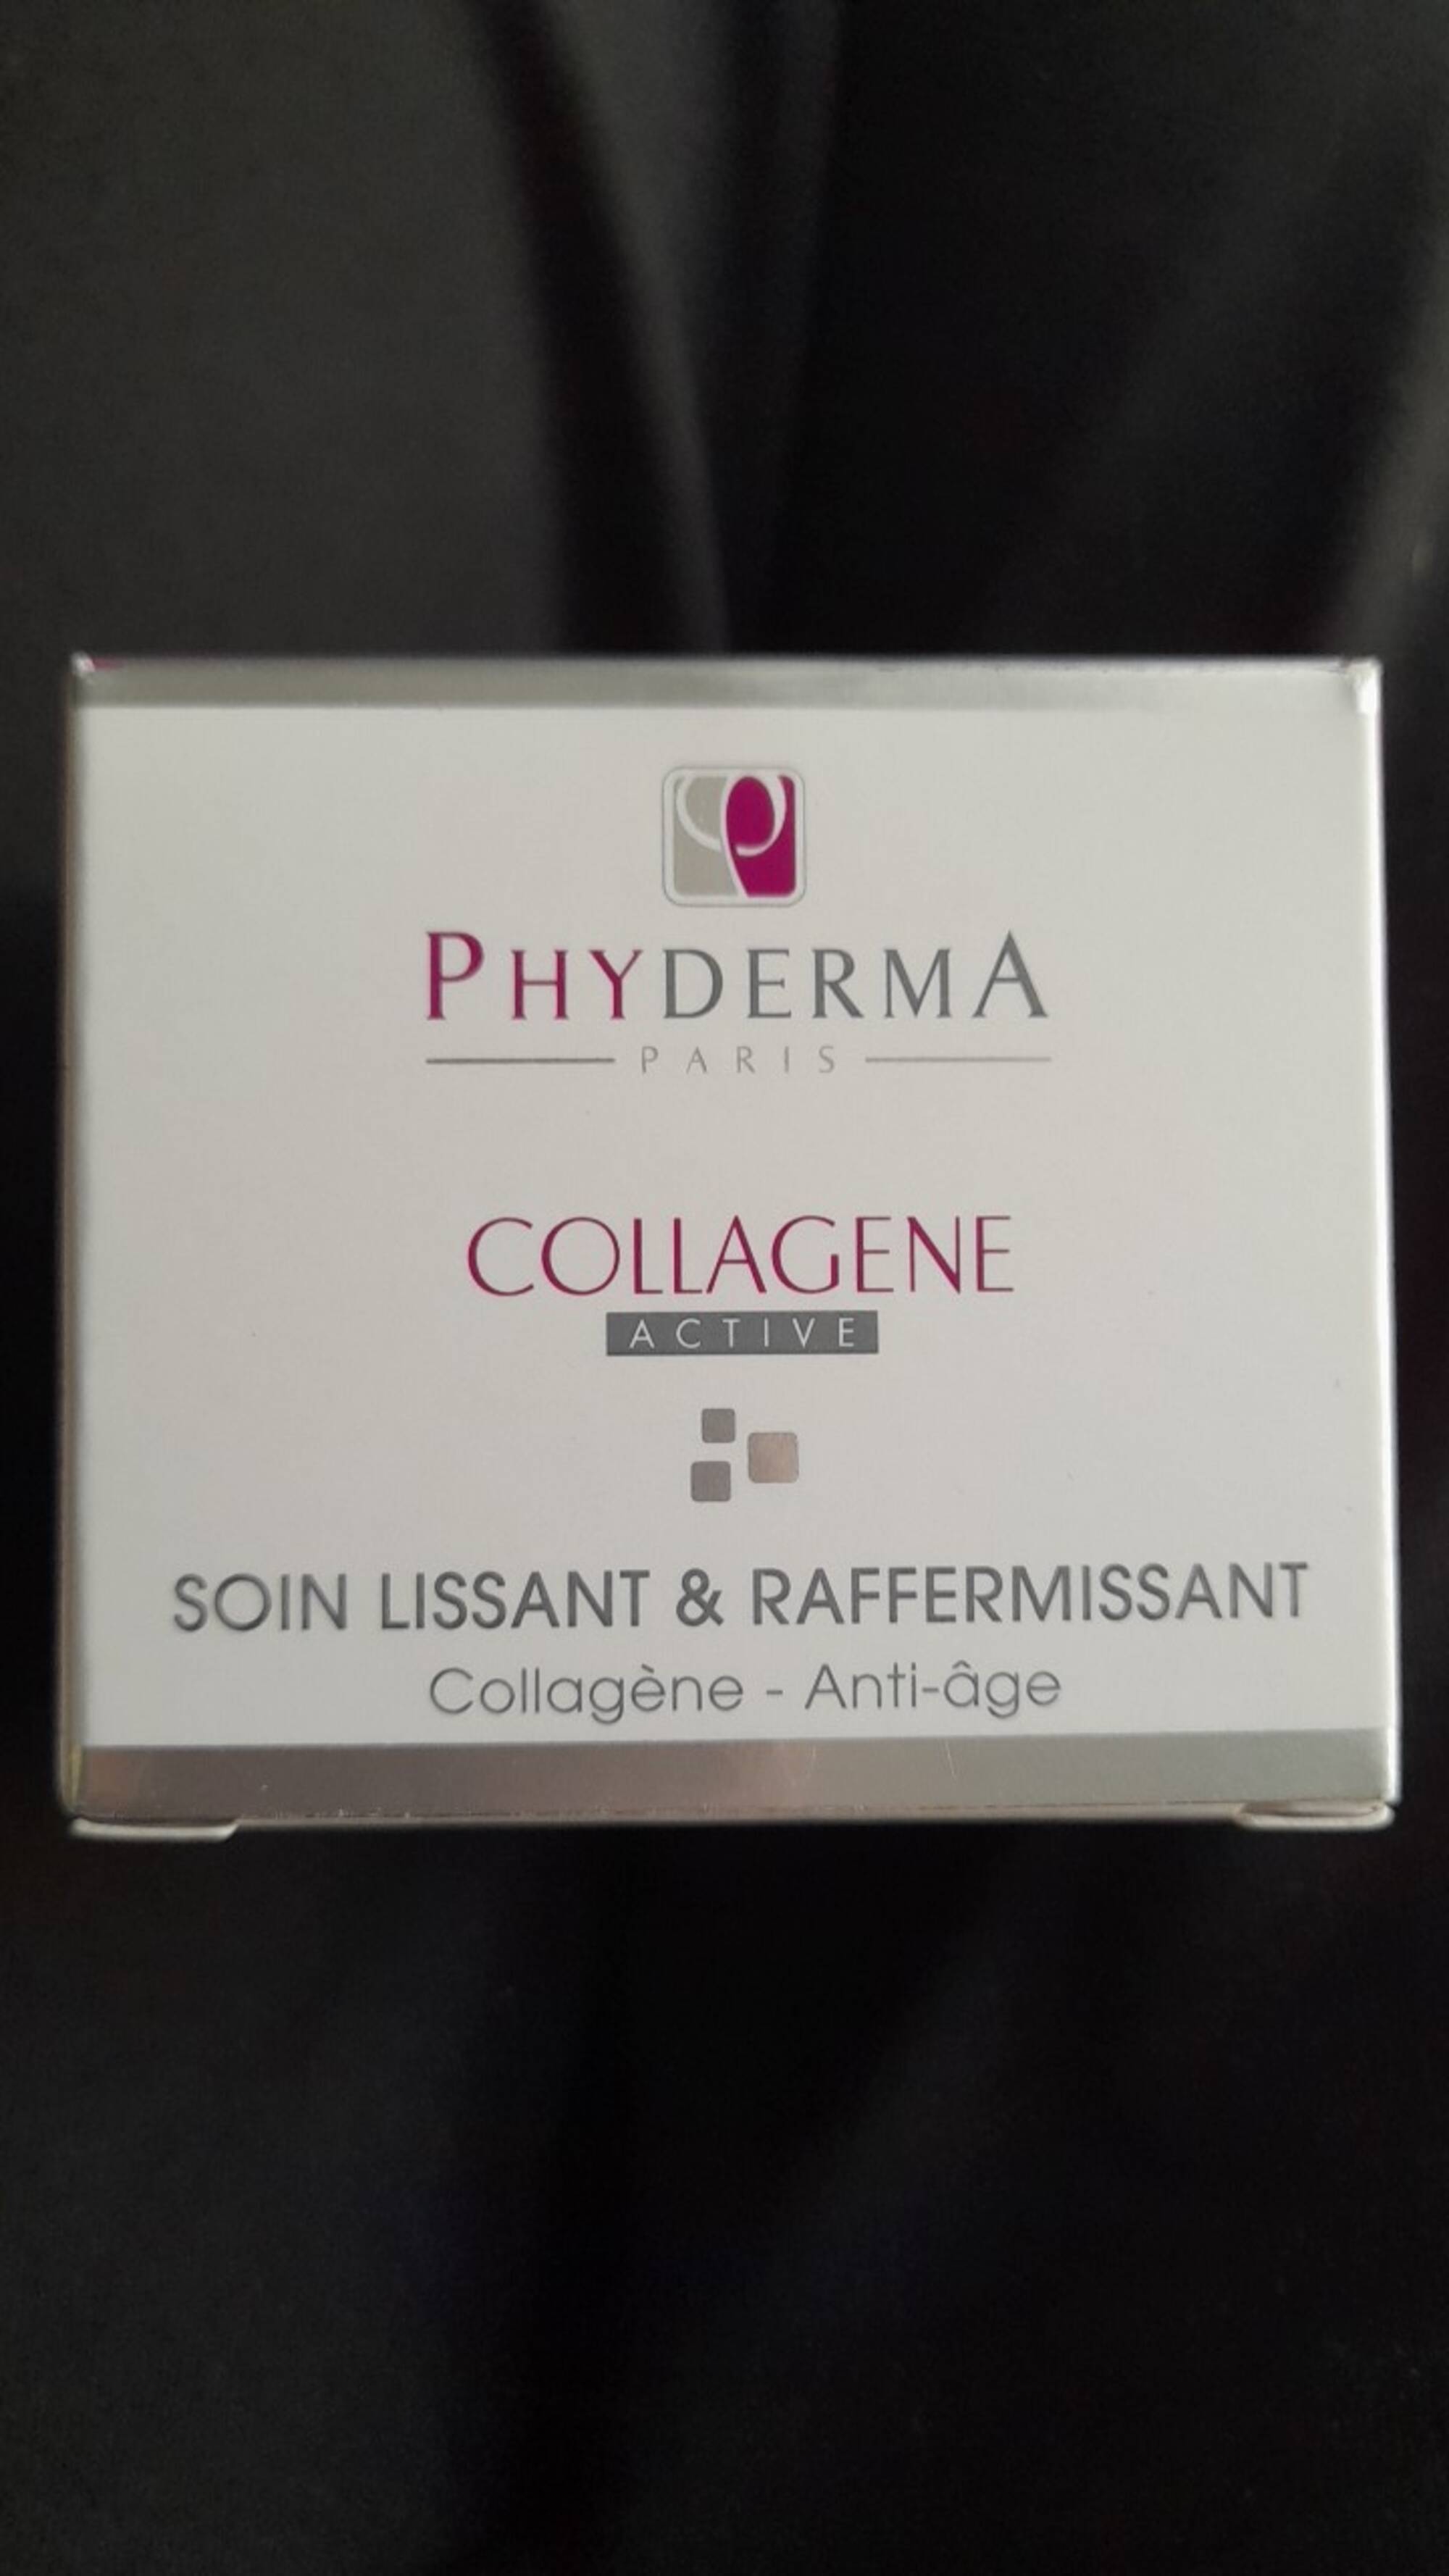 PHYDERMA - Collagene - Soin lissant & raffermissant